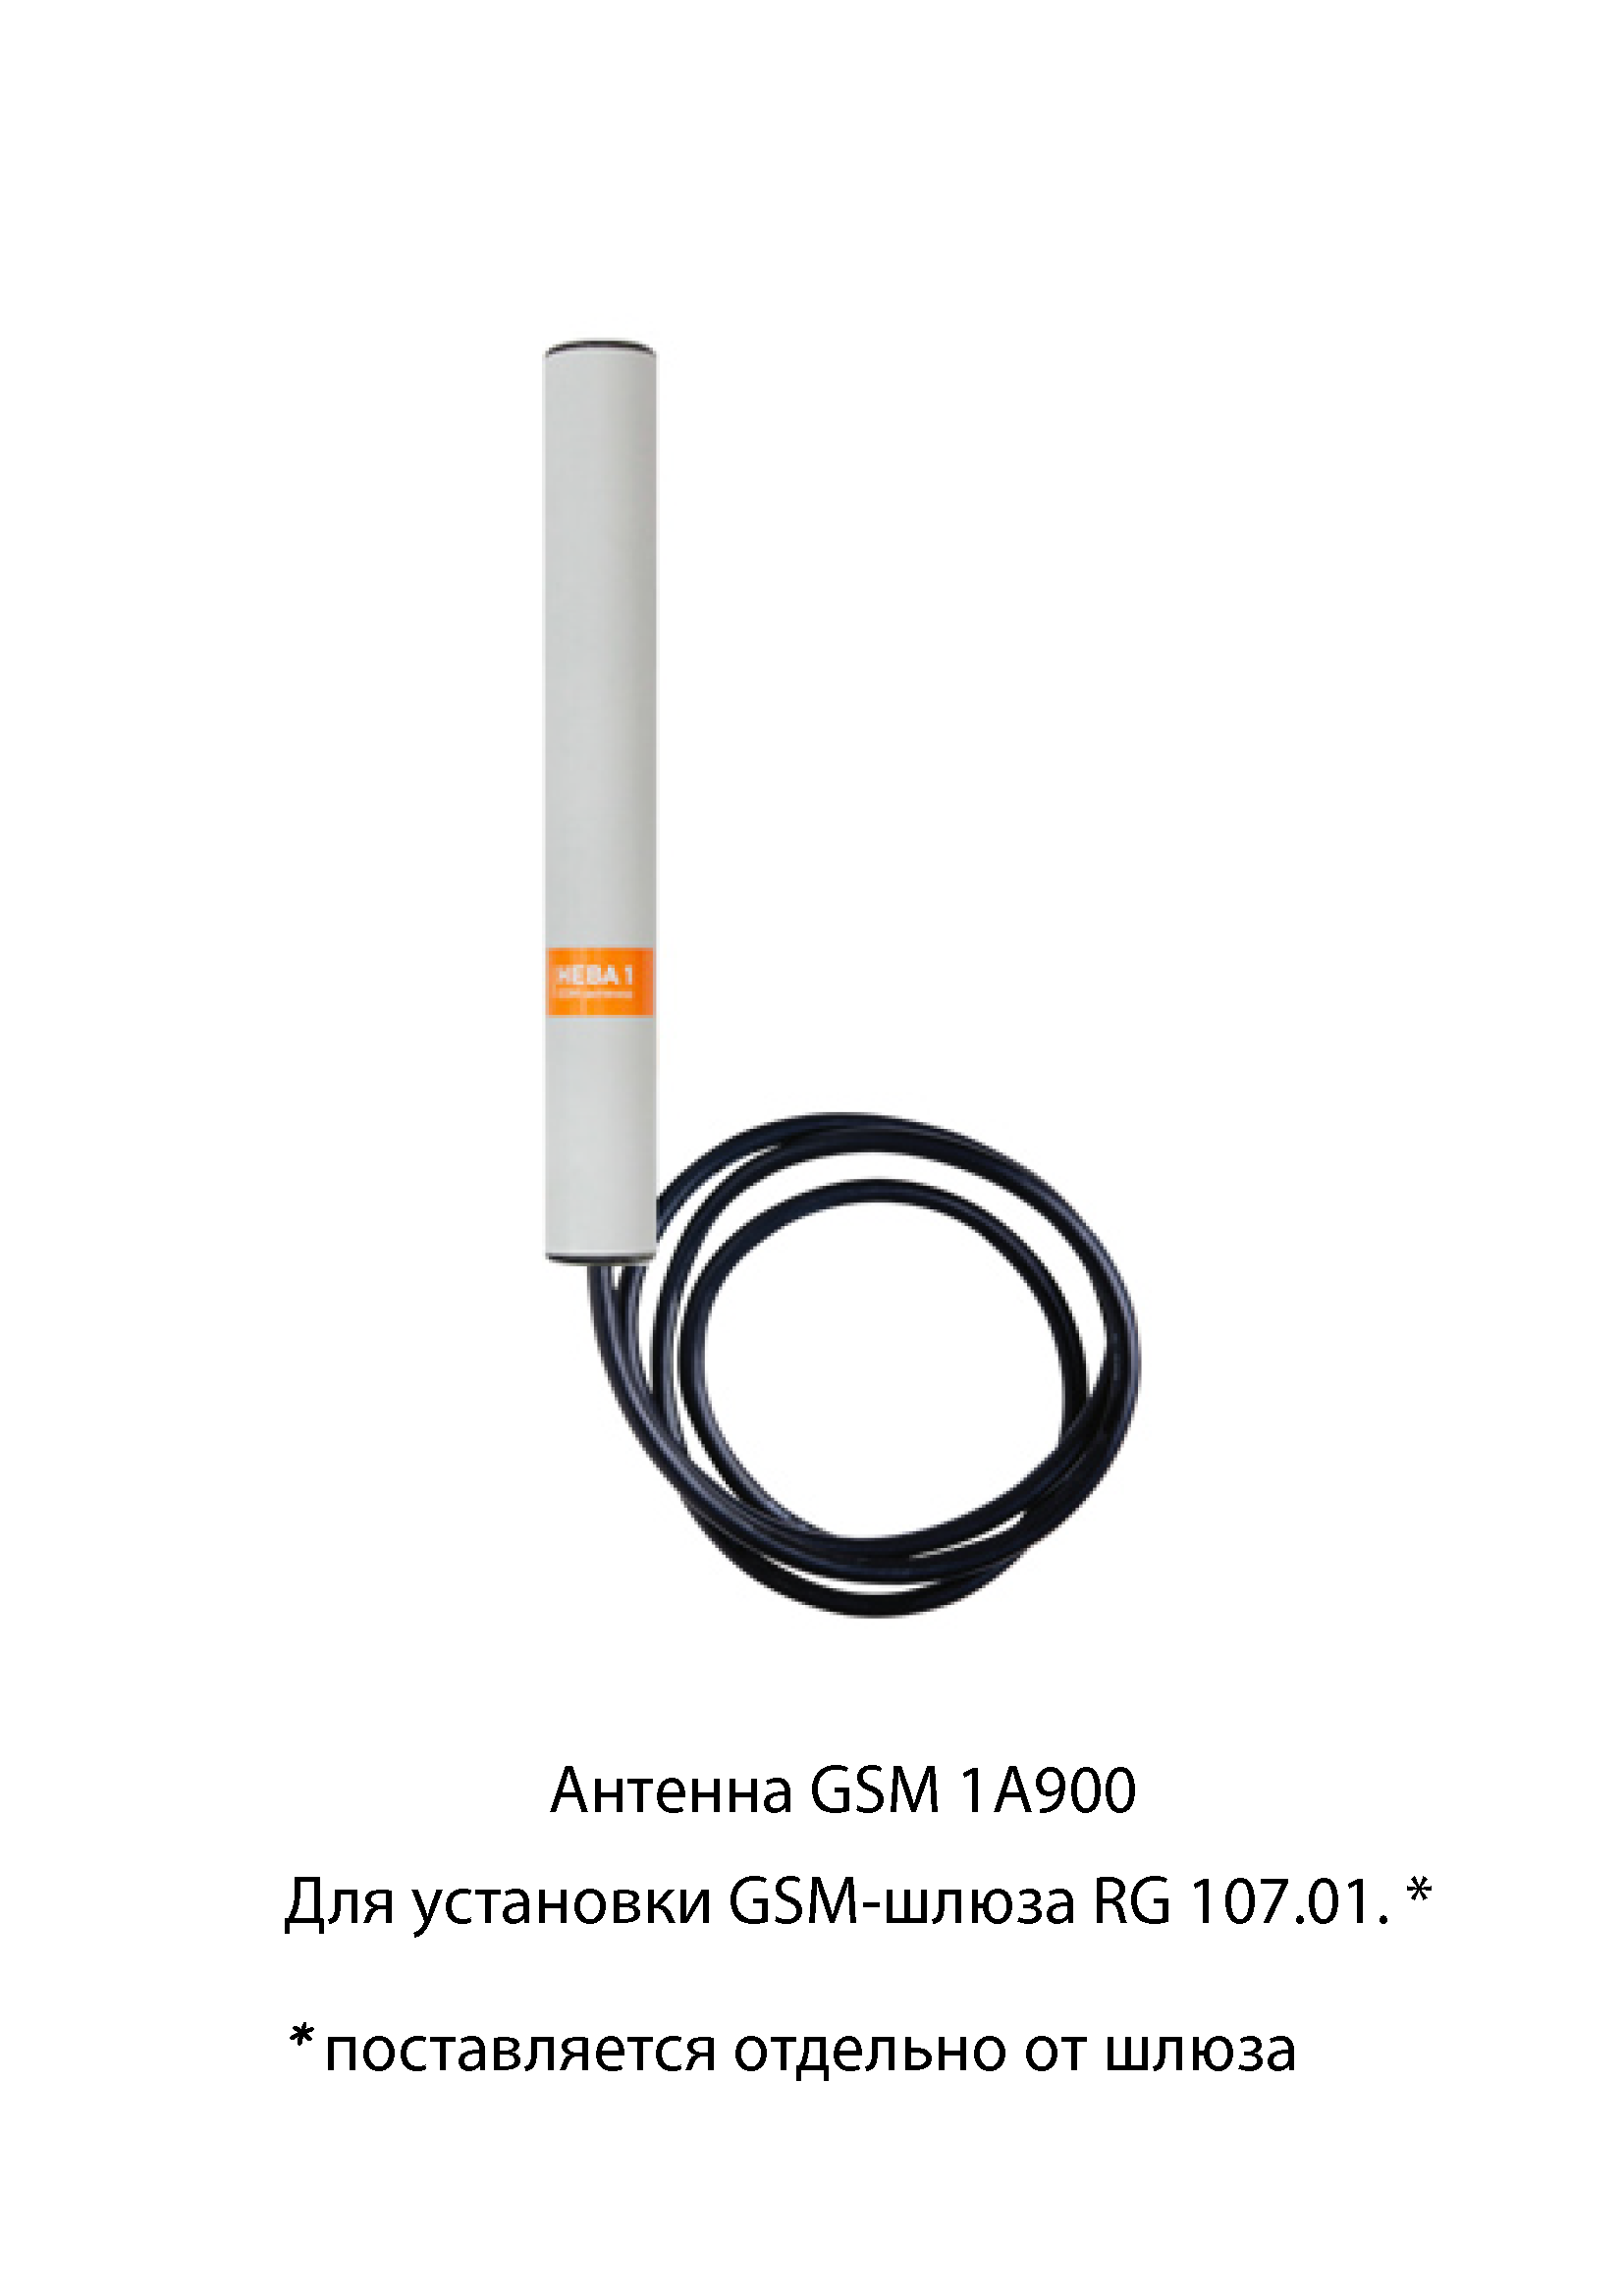 GSM-шлюз RG 107.01